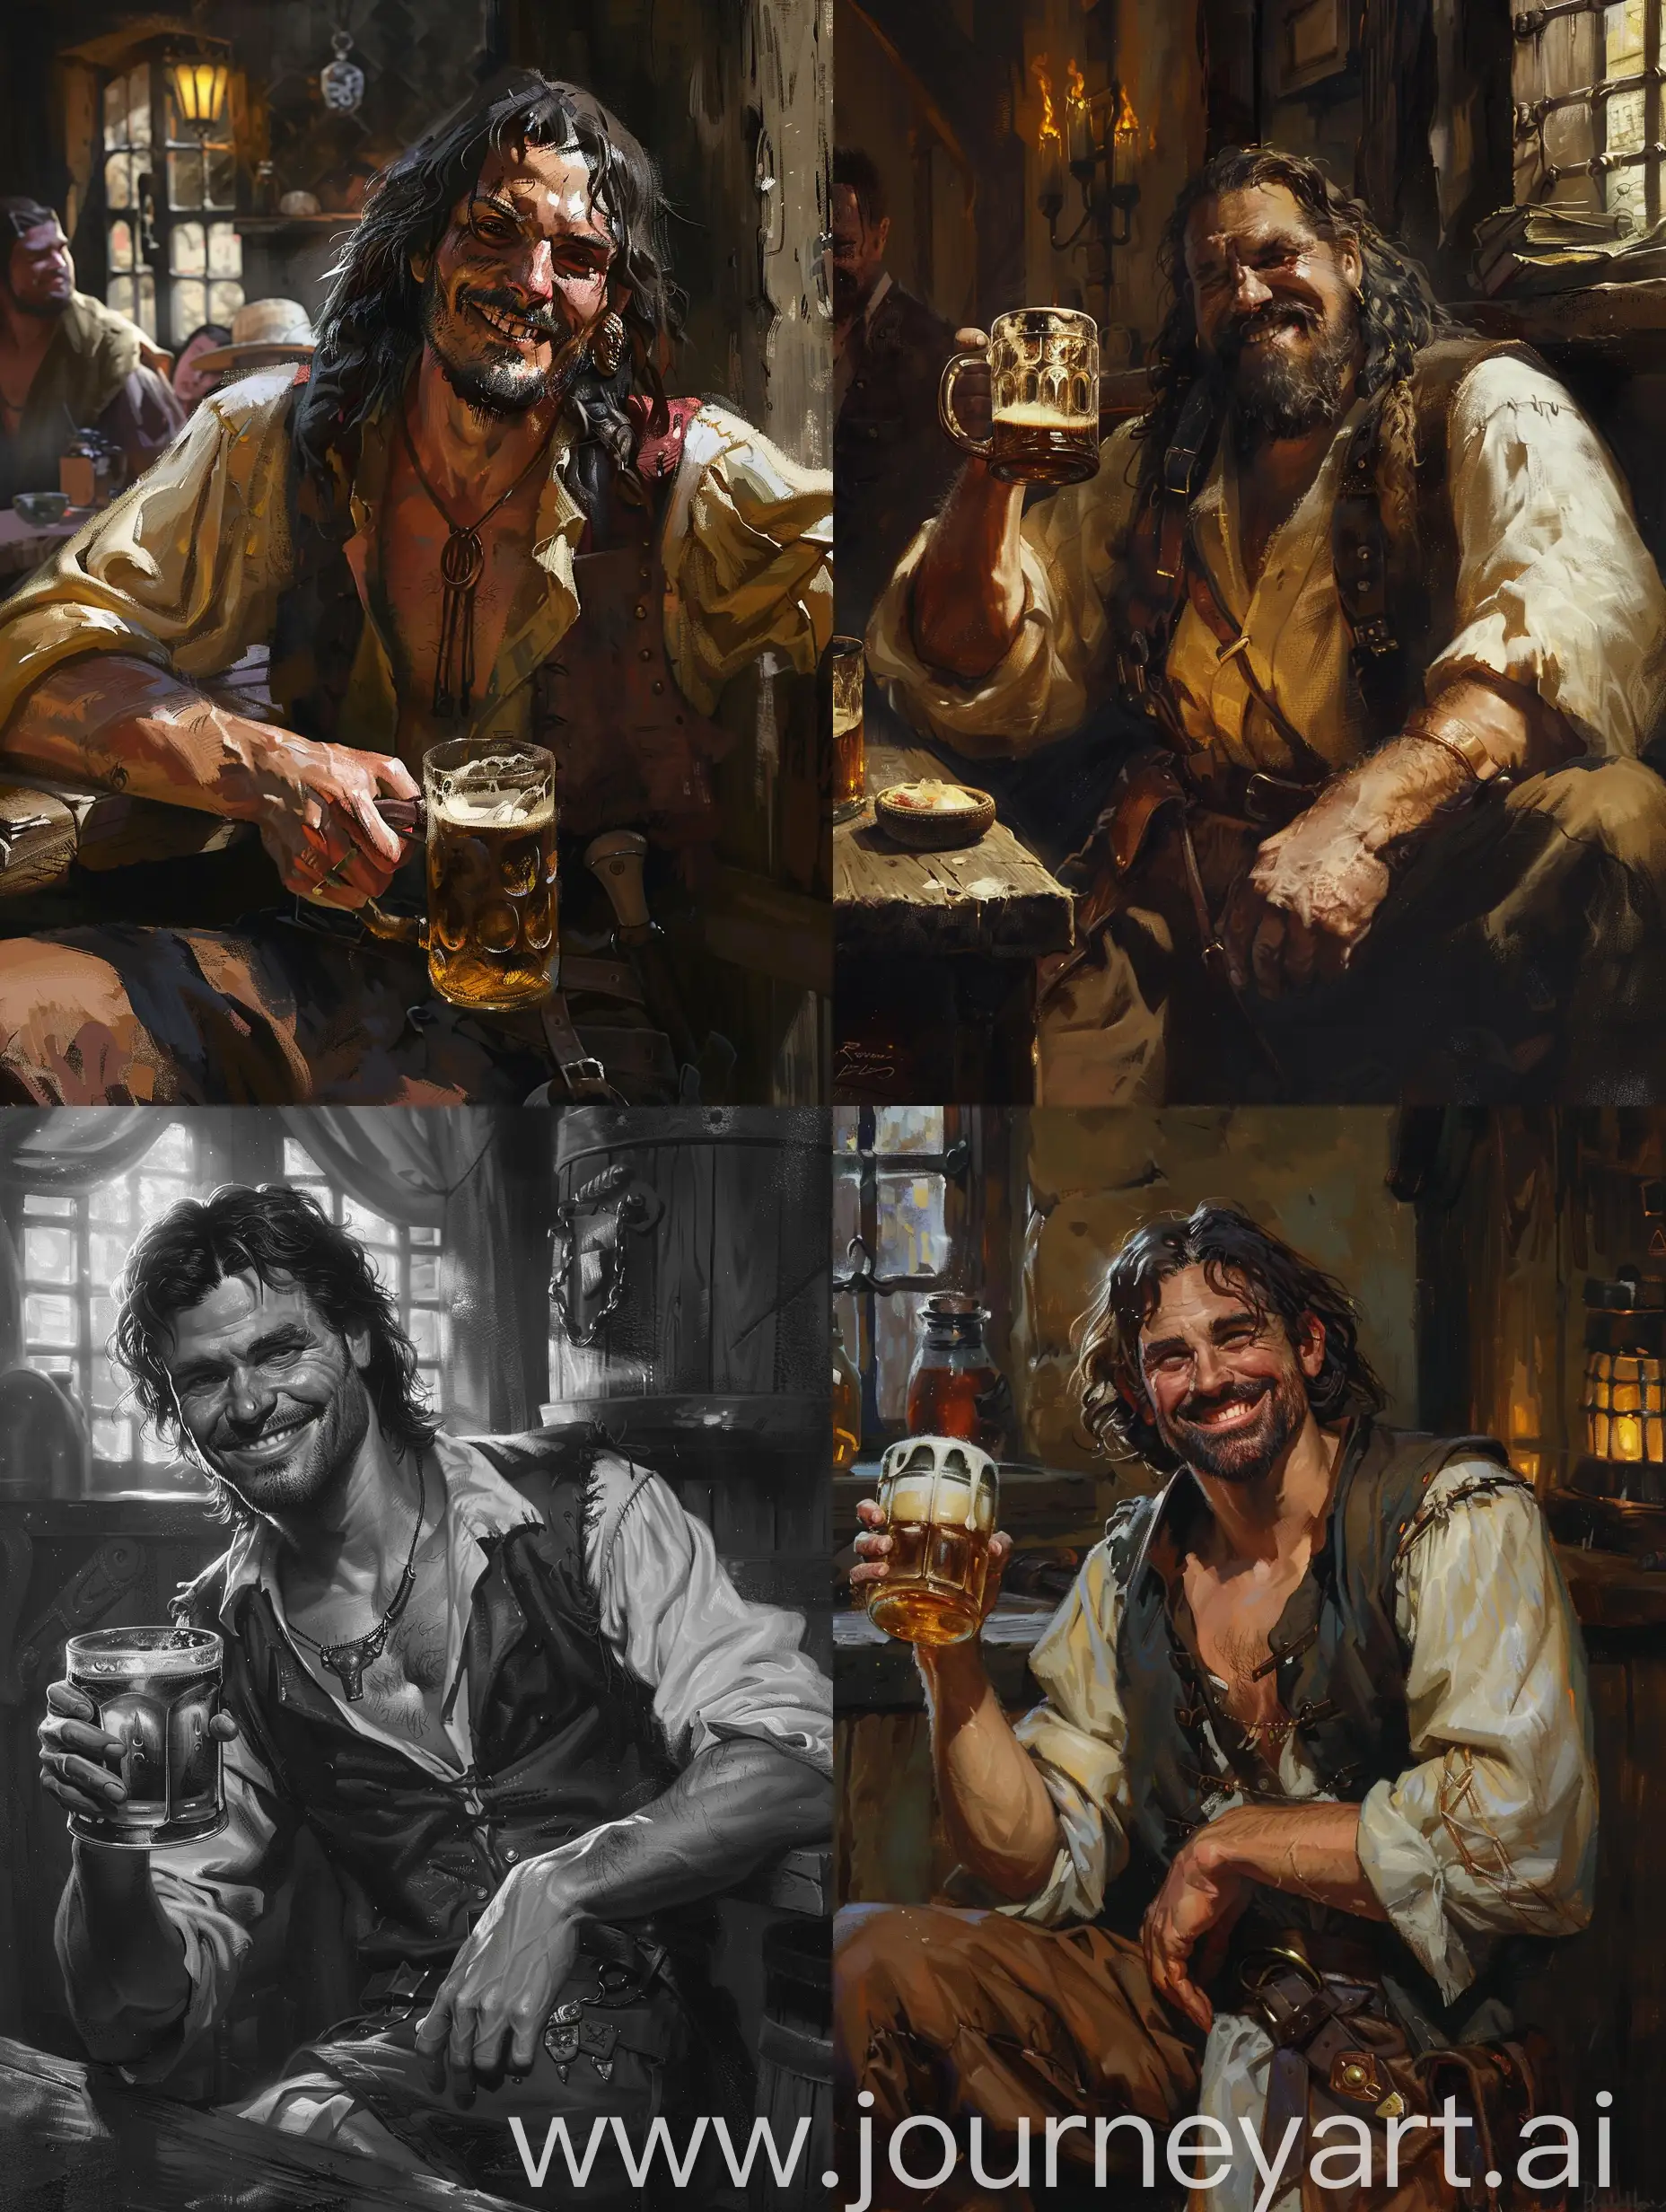 Man-Smiling-with-Beer-Mug-in-Tavern-Scene